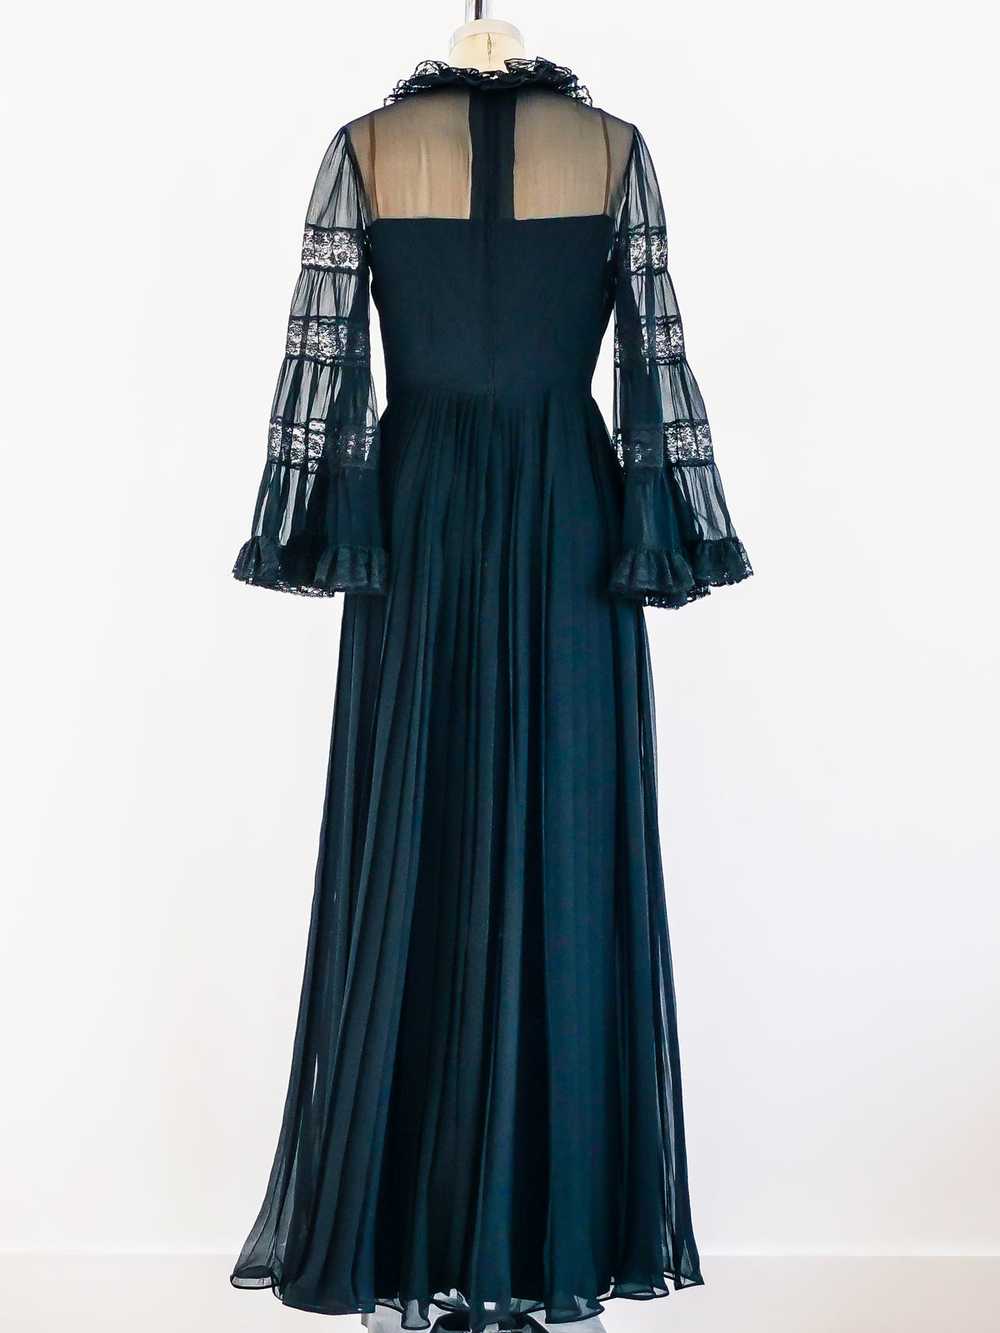 Elizabeth Arden Black Chiffon Gown - image 3